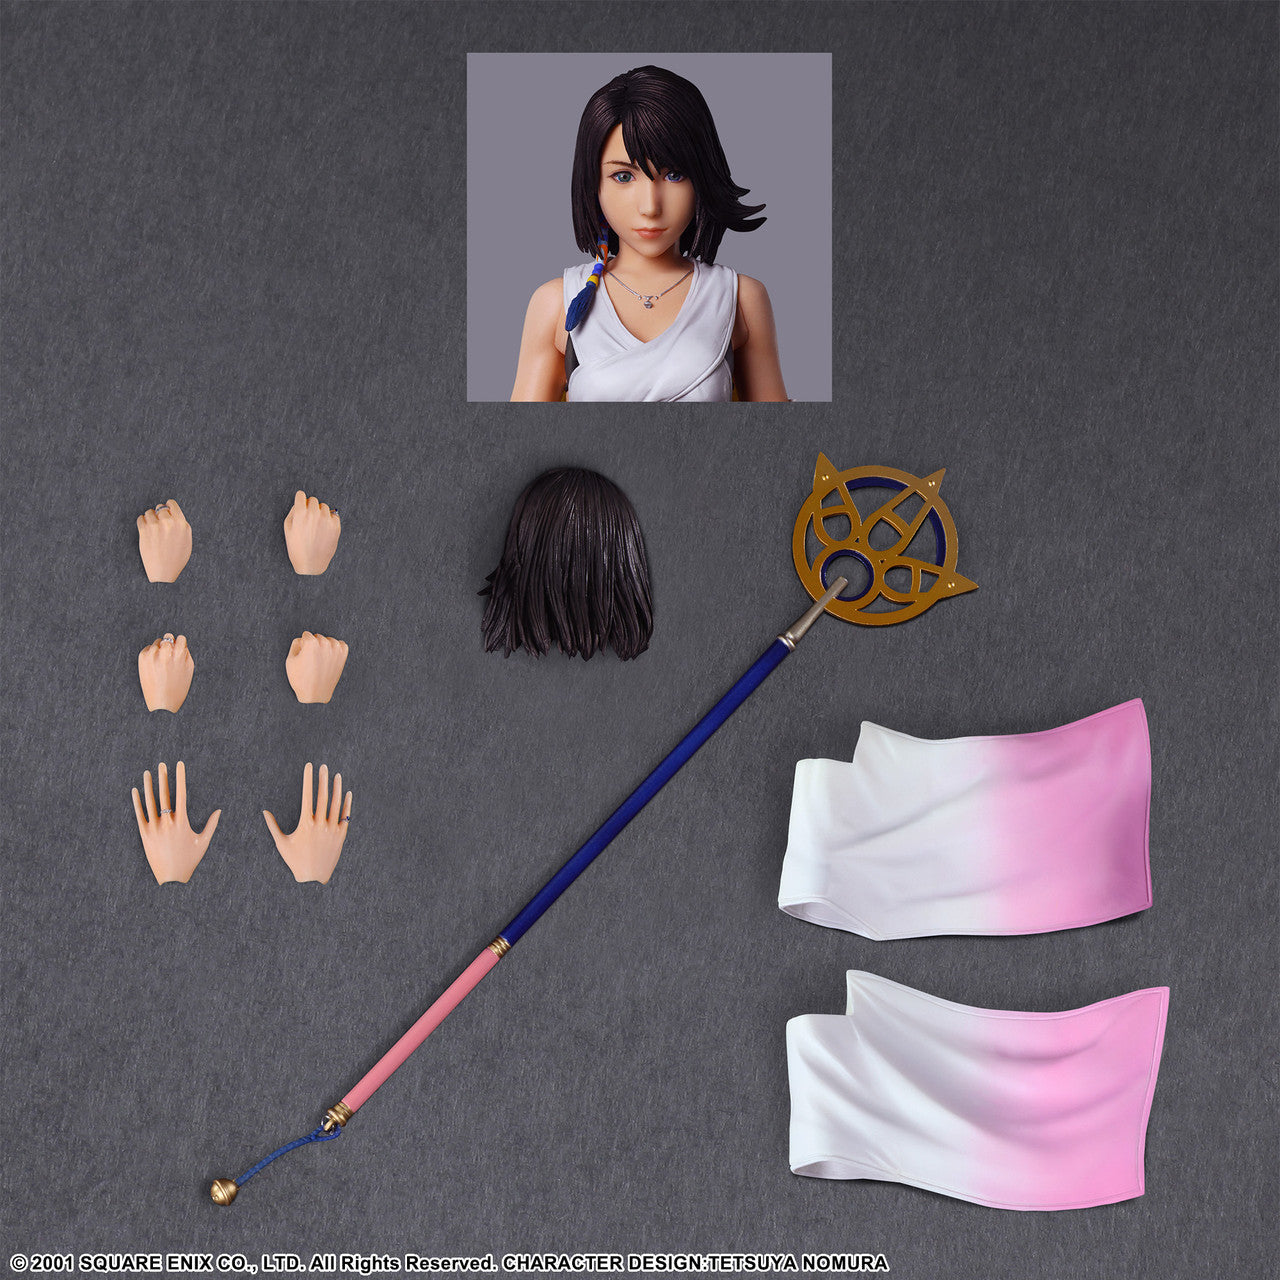 (Pre-Order) Play Arts Kai Final Fantasy X (10) Yuna Action Figure